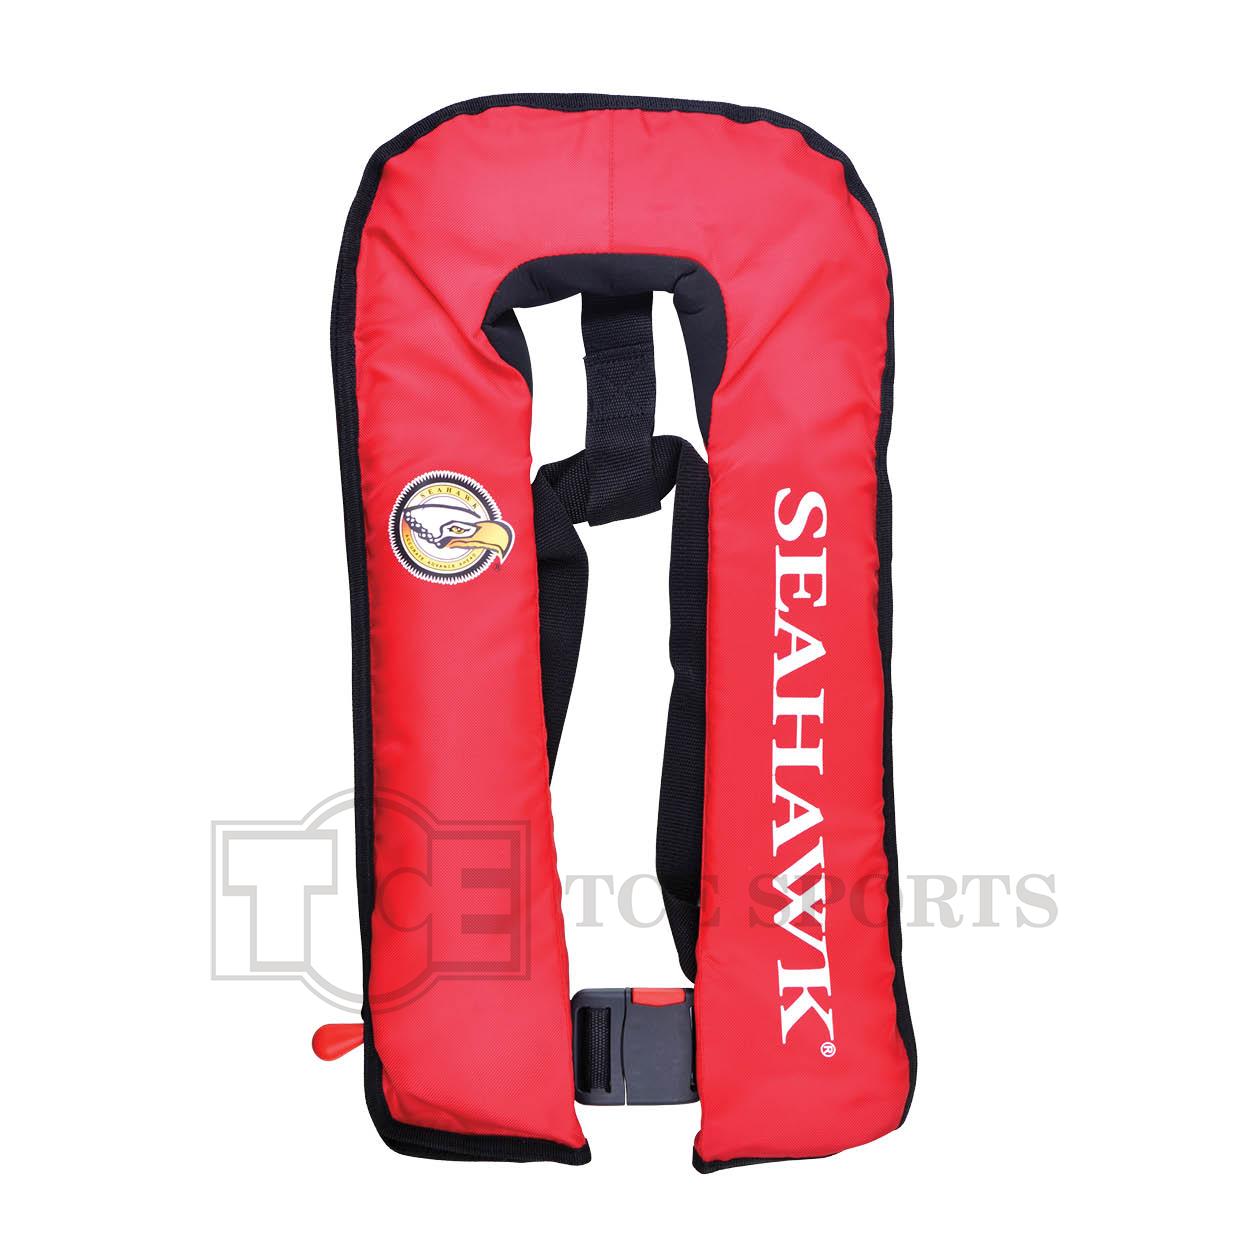 Seahawk - Life Jacket - DHI-017 02